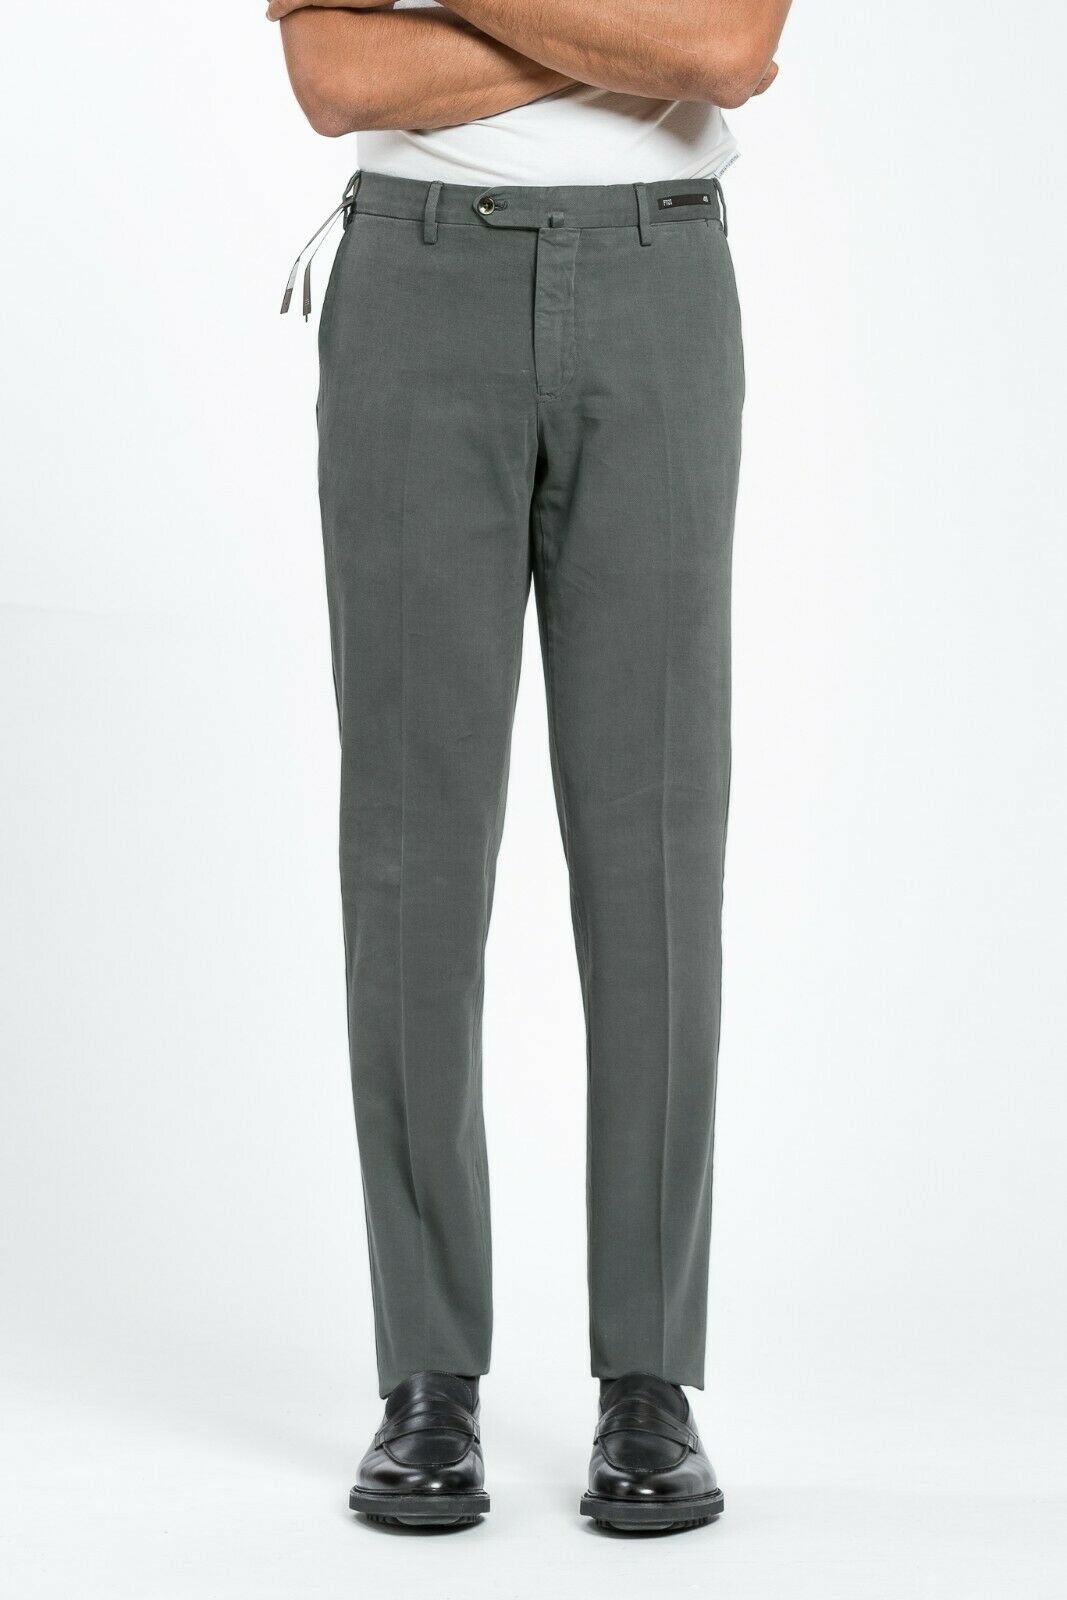 320$ PT01 BLENDED CASHMERE Myrtle Green Trousers Pants Cotton Cashmere ...